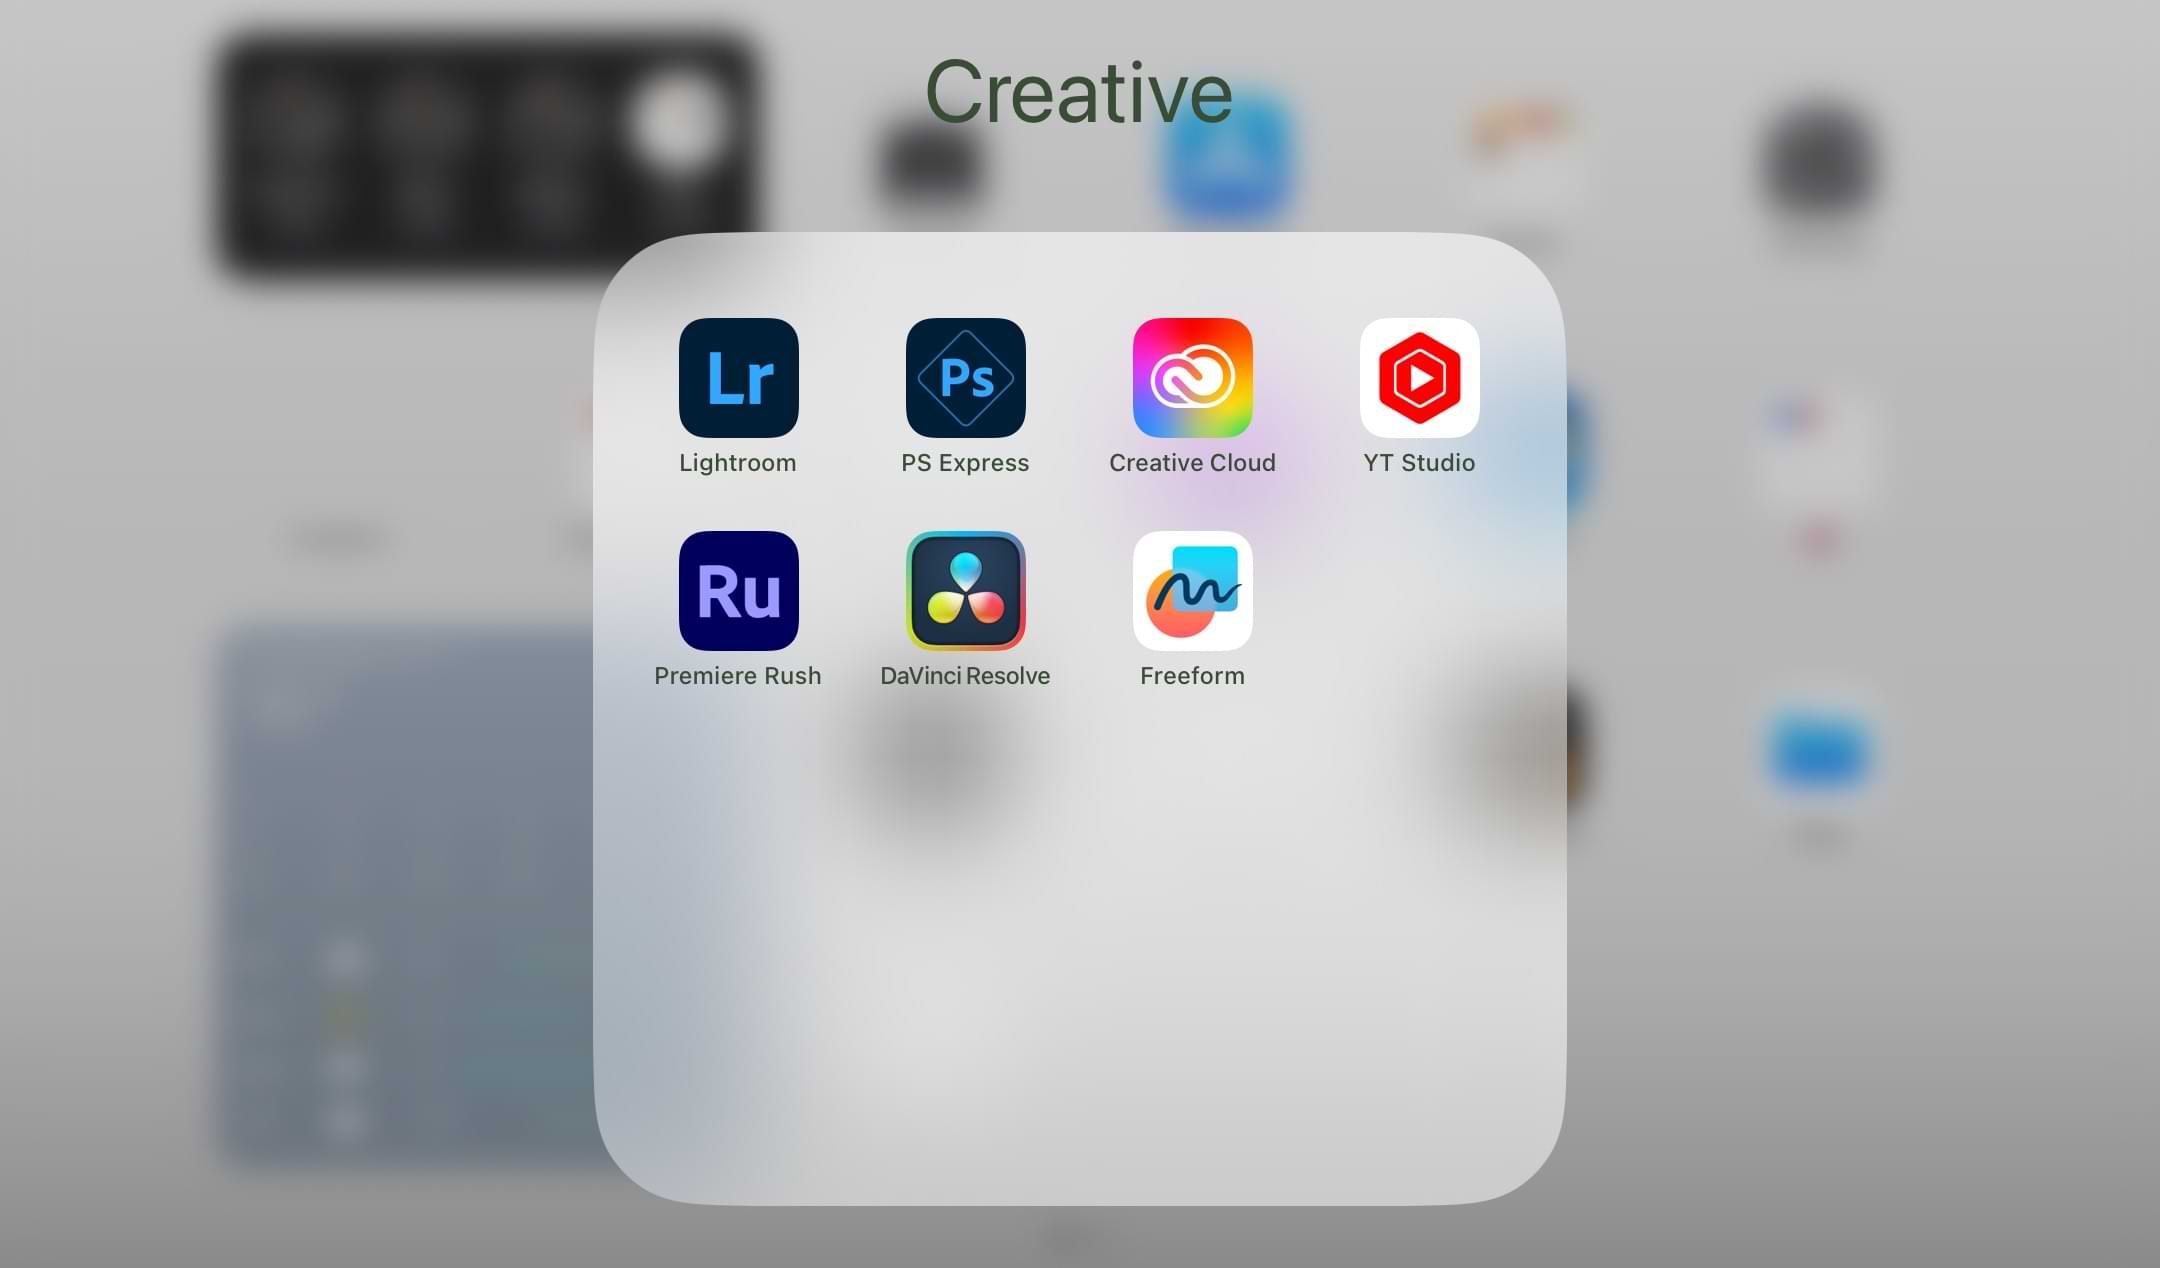 Example of a folder on an iPad